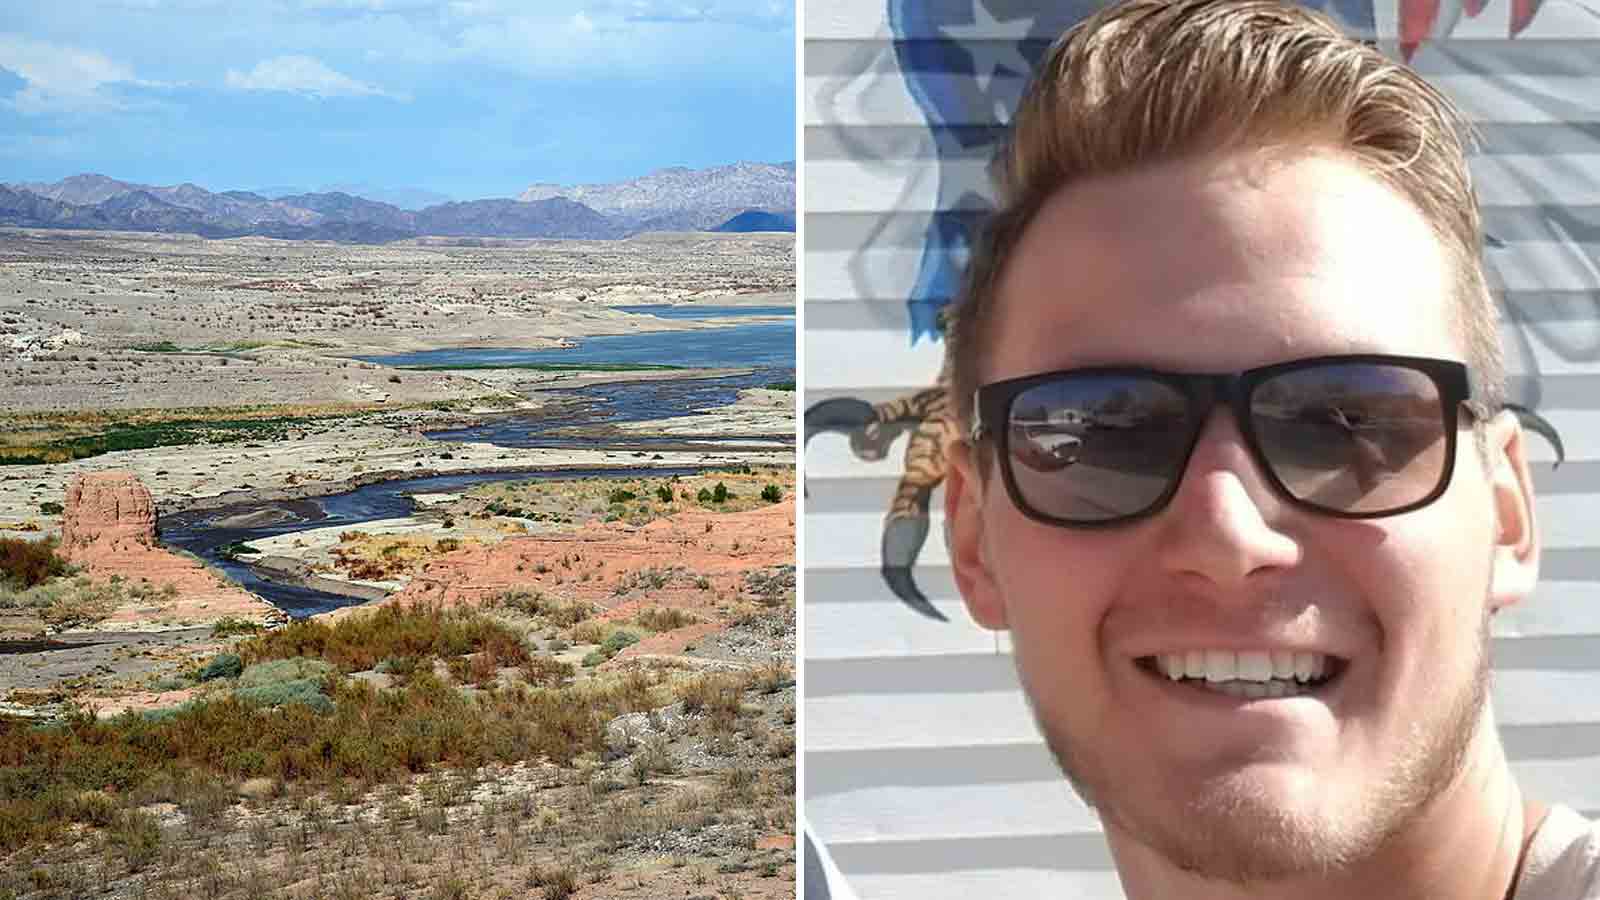 The body of a man was found in northwestern Arizona....